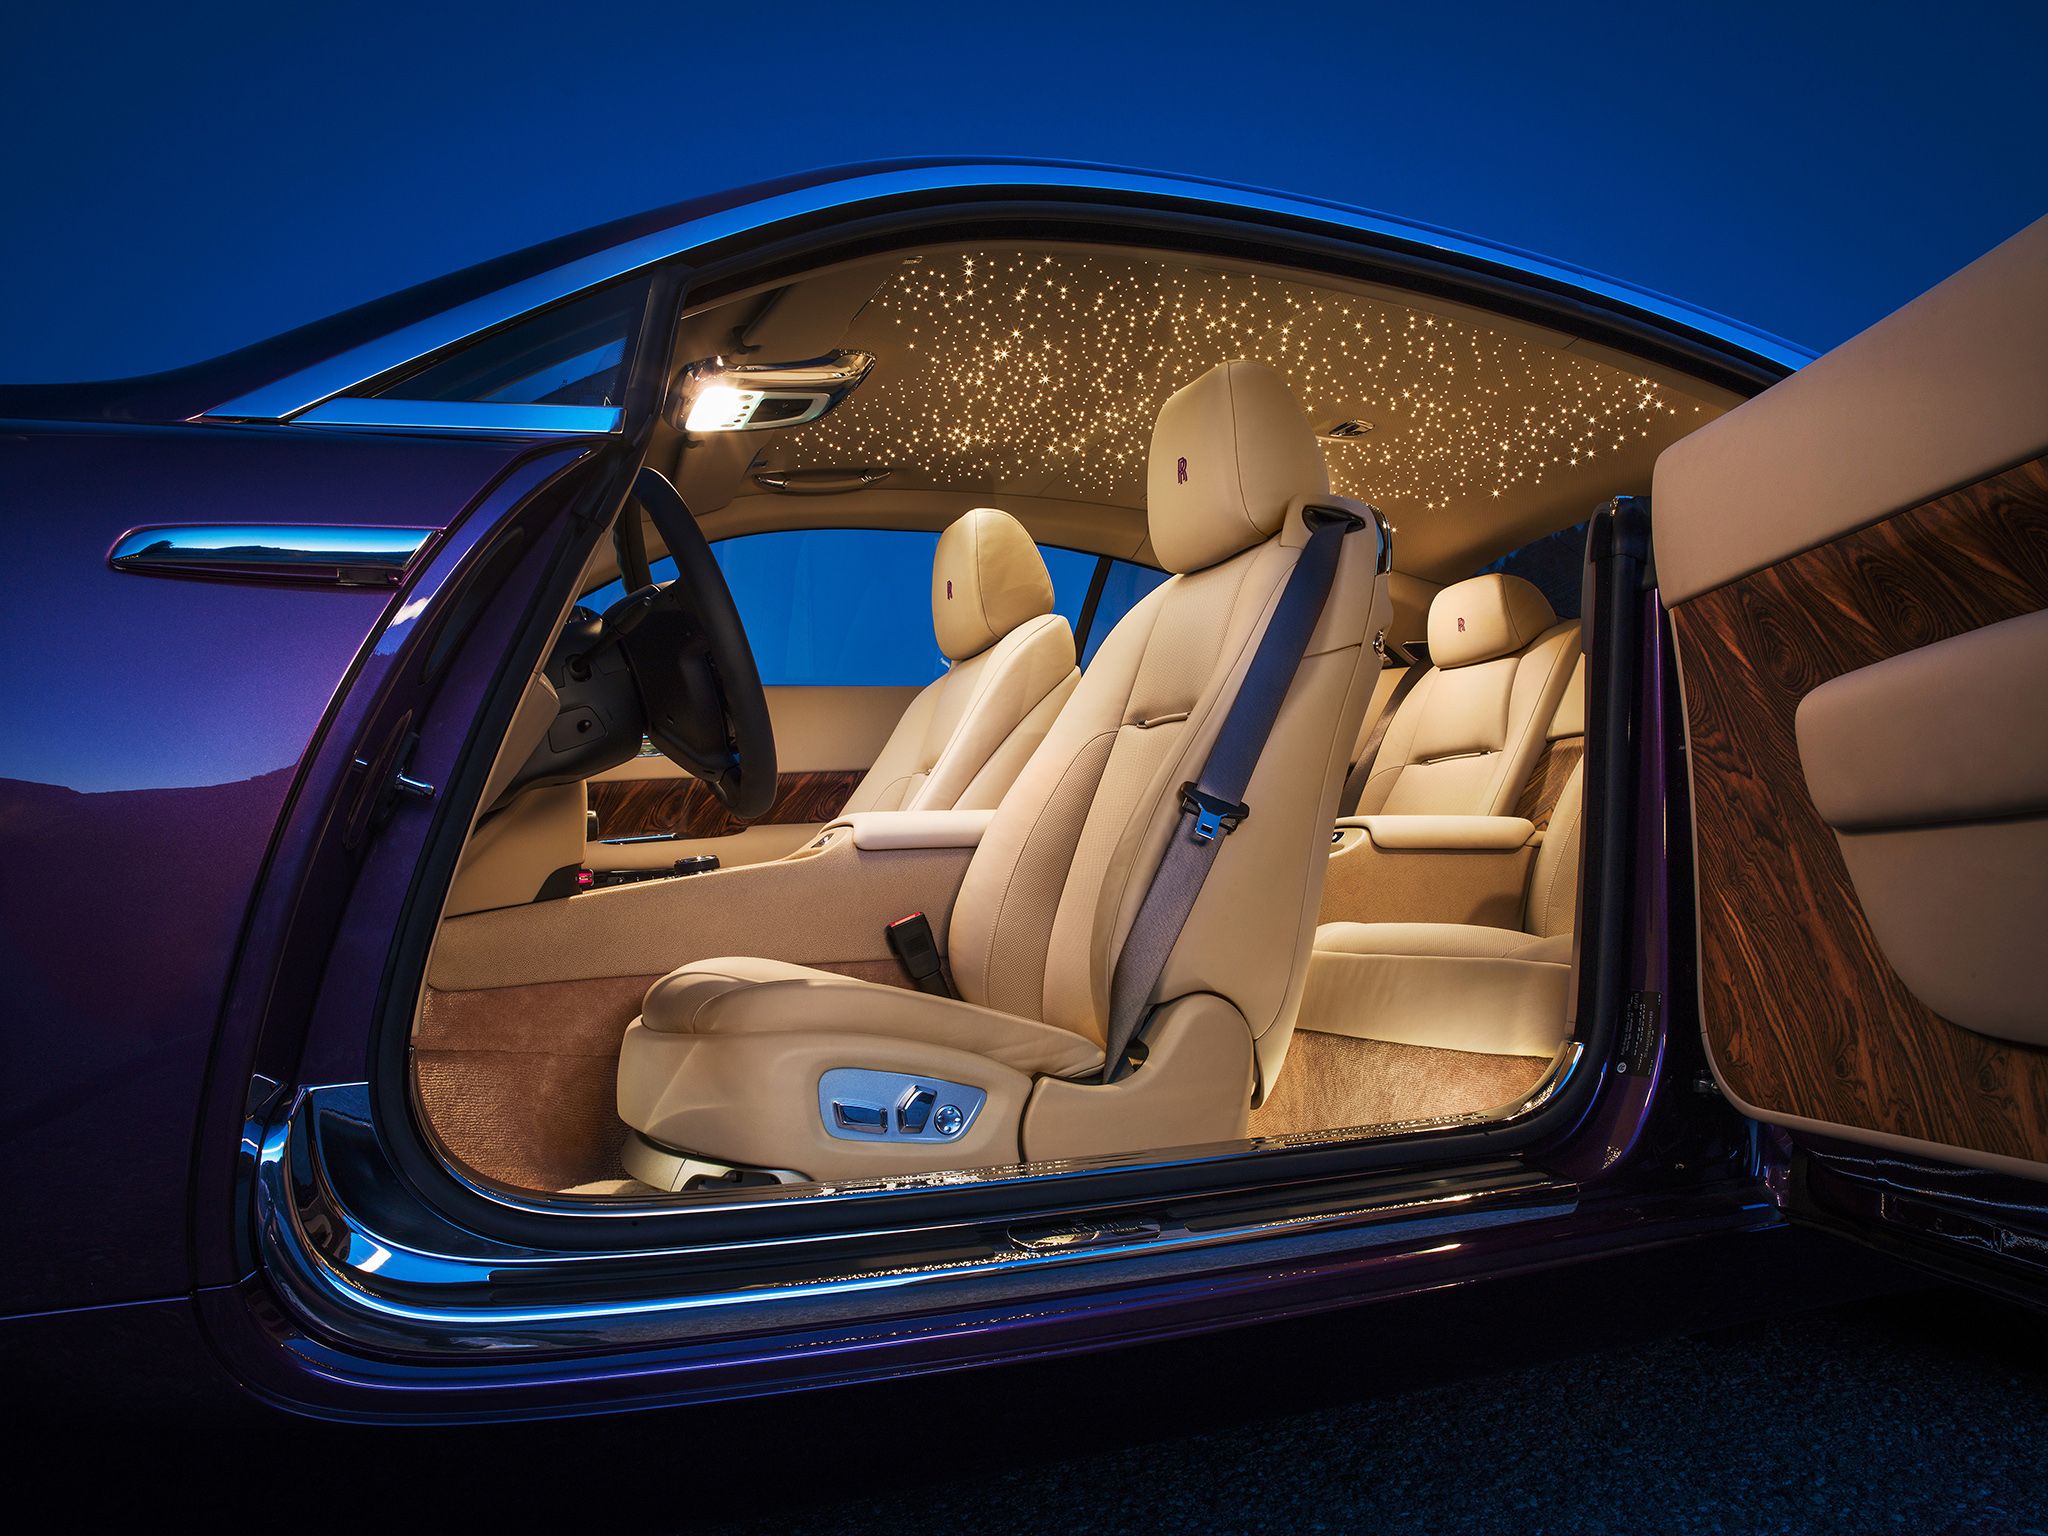 Rolls Royce Wraith luxury supercar interior g wallpaper